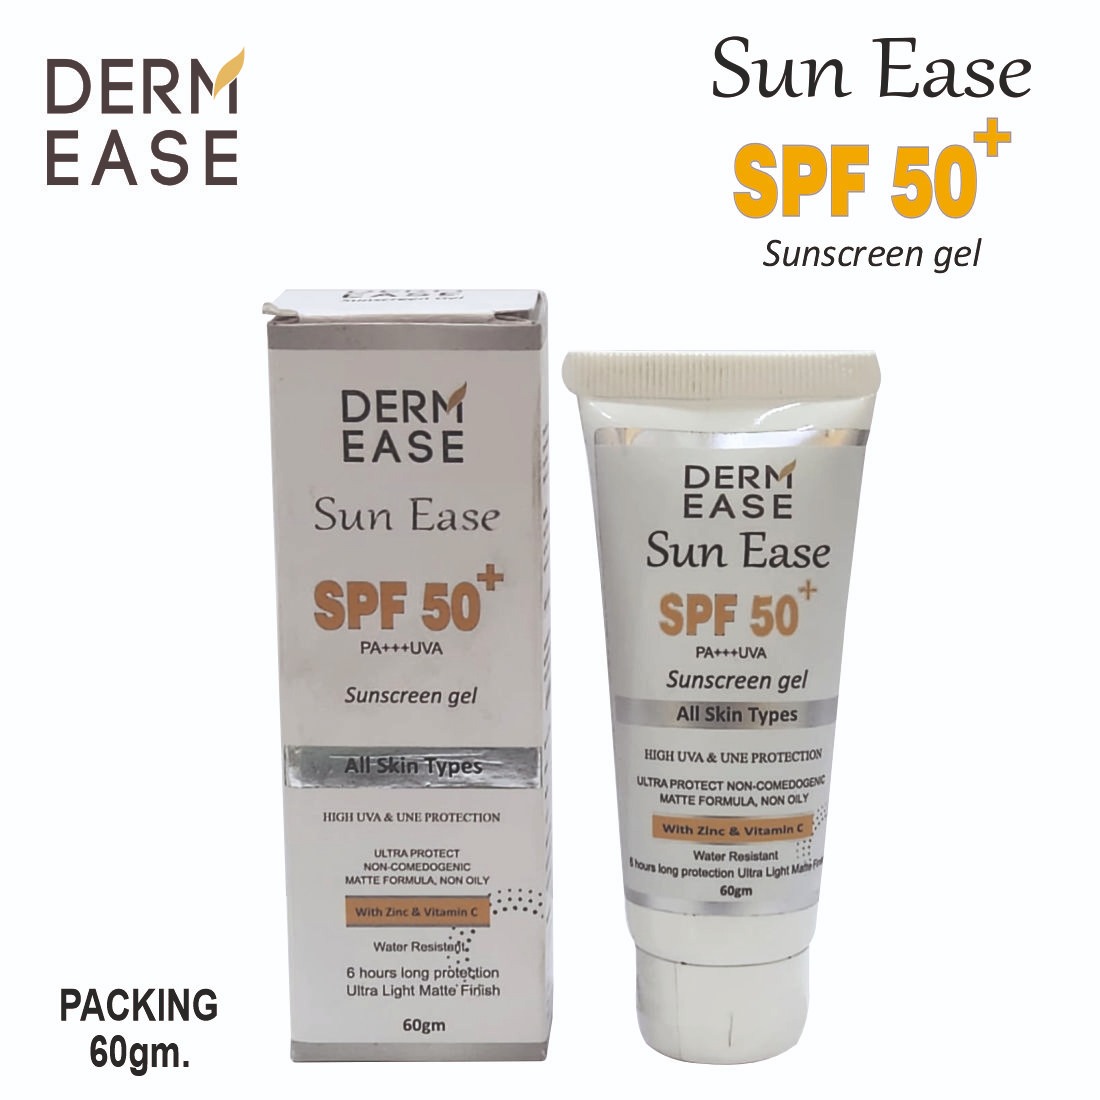 DERM EASE Sun Ease SPF 50+ PA+++UVA Sunscreen gel 